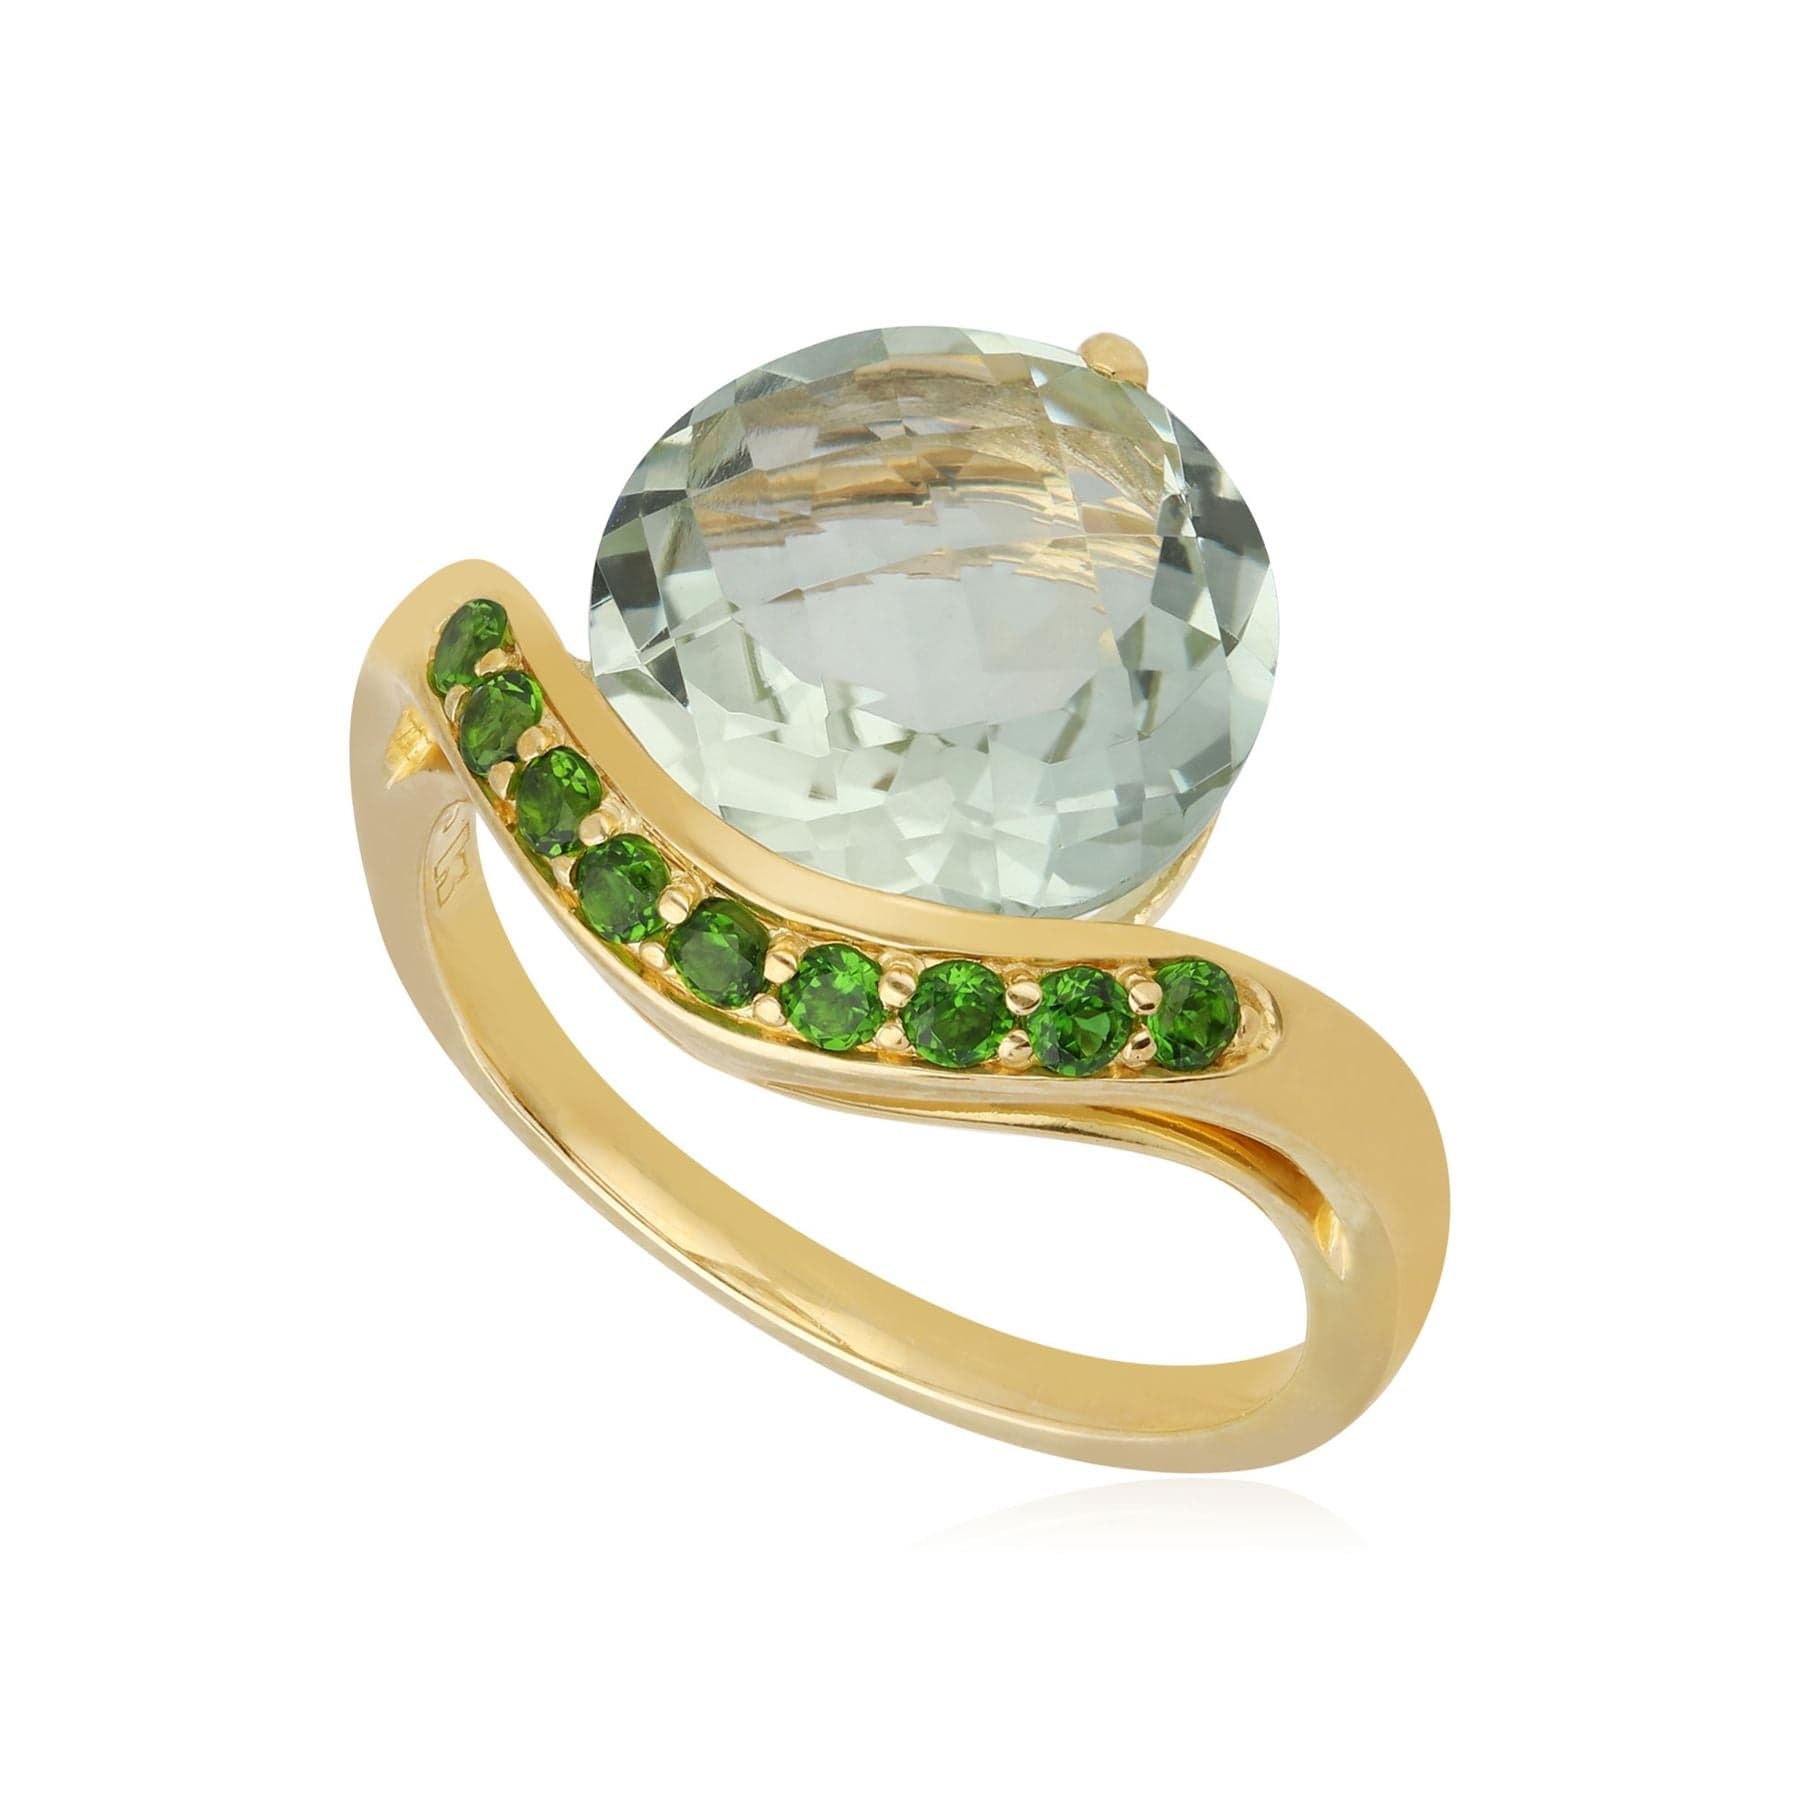 Kosmos Green Mint Quartz & Chrome Diopside Cocktail Ring in 9ct Yellow Gold - Gemondo